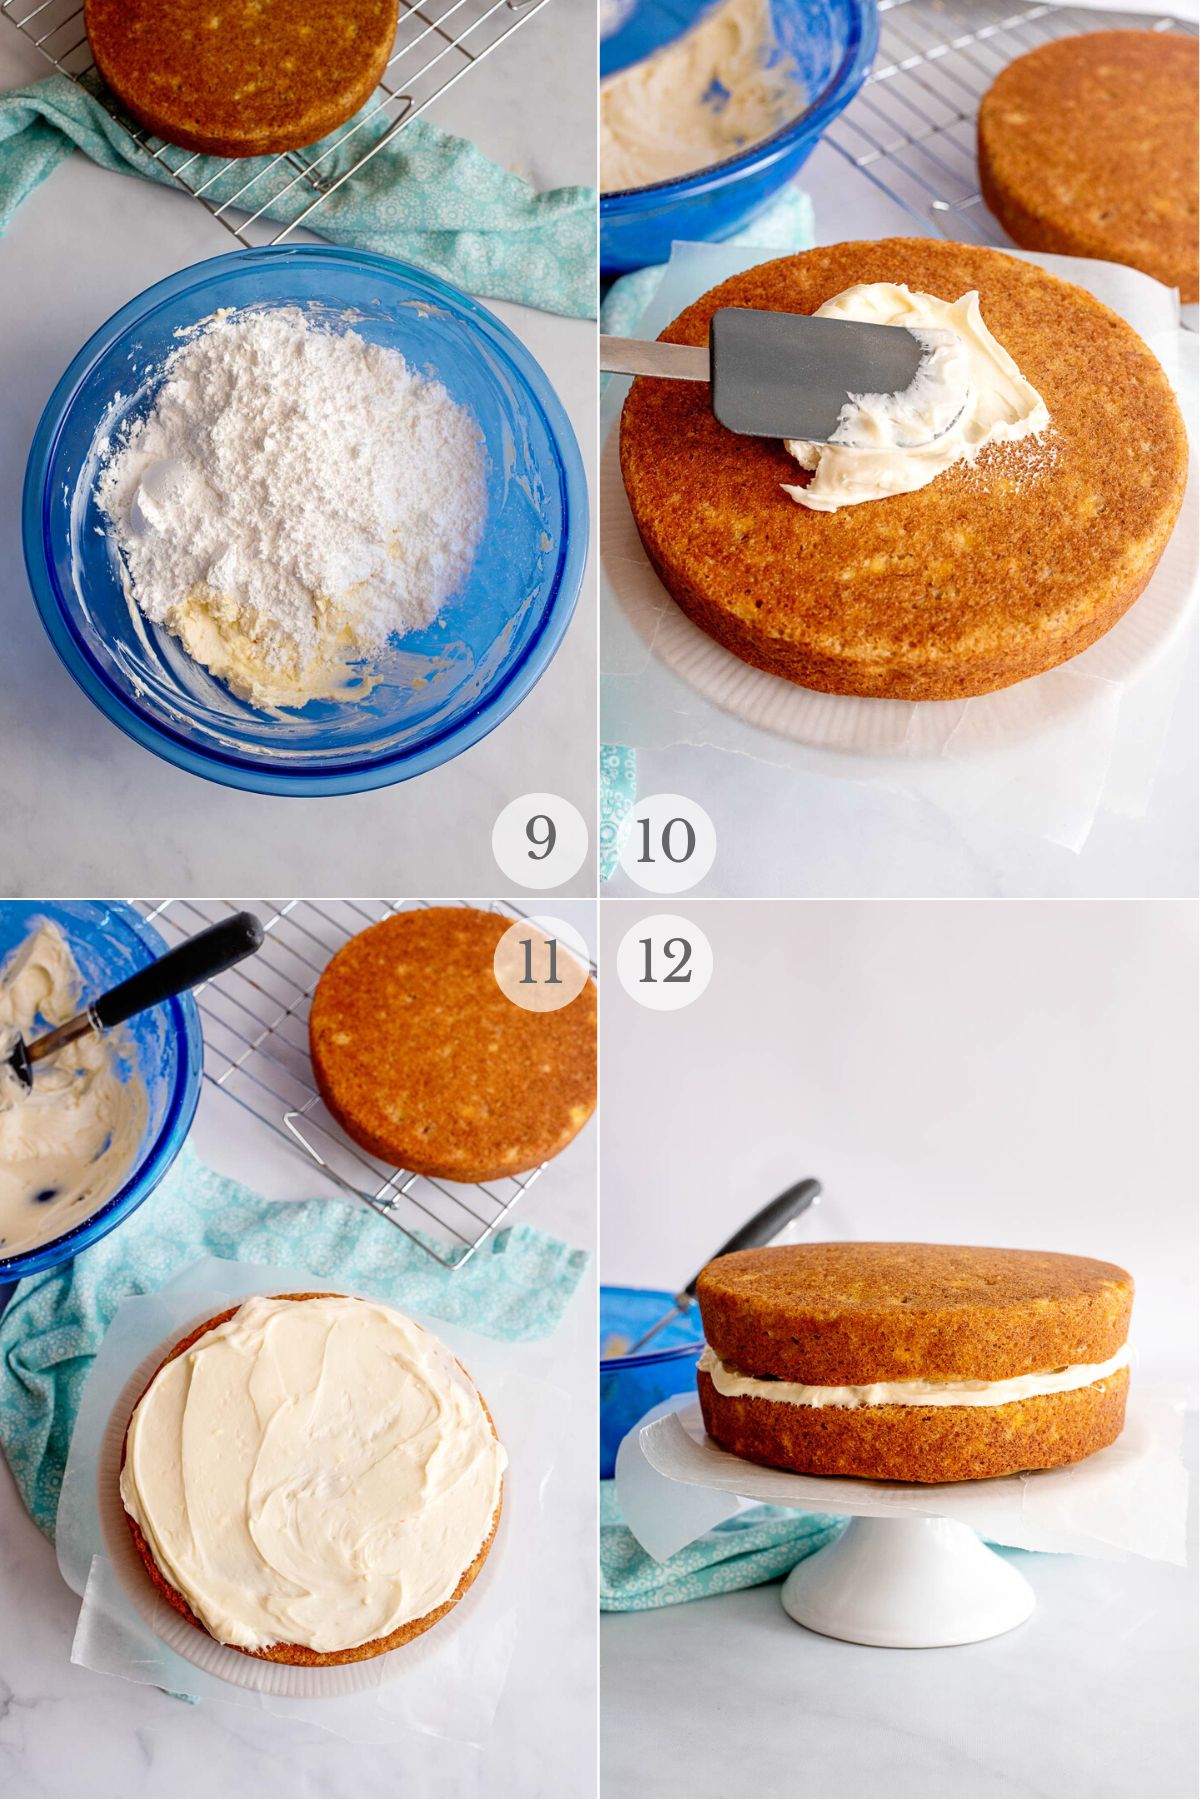 banana cake recipe steps 9-12.